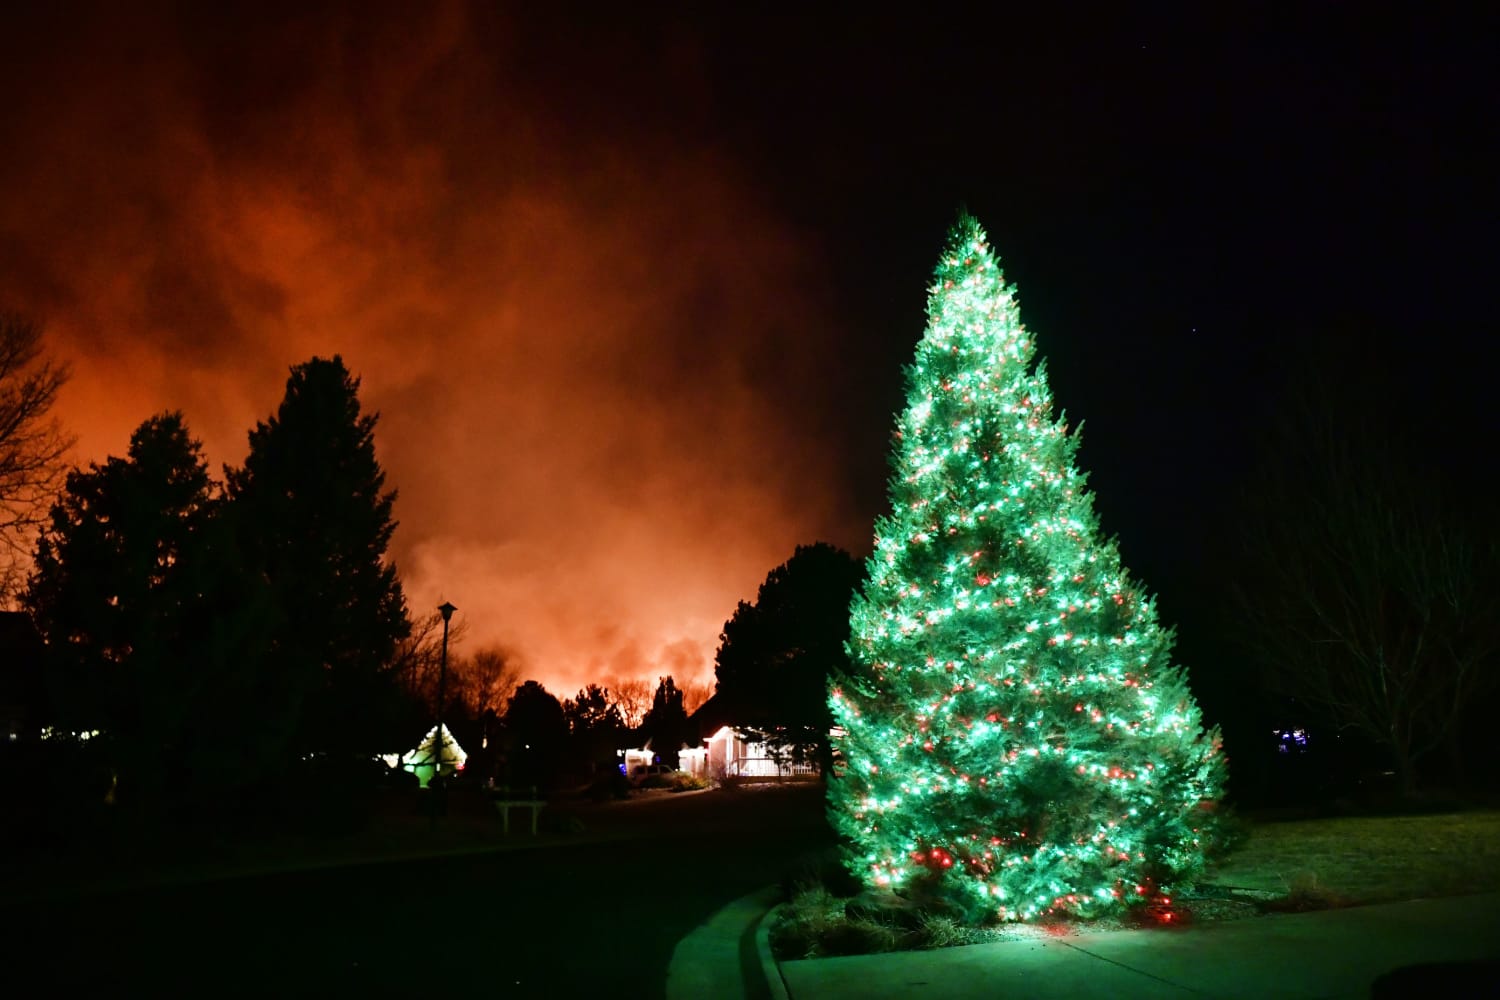 Marshall Fire: Photos of the Devastating Colorado Wildfire